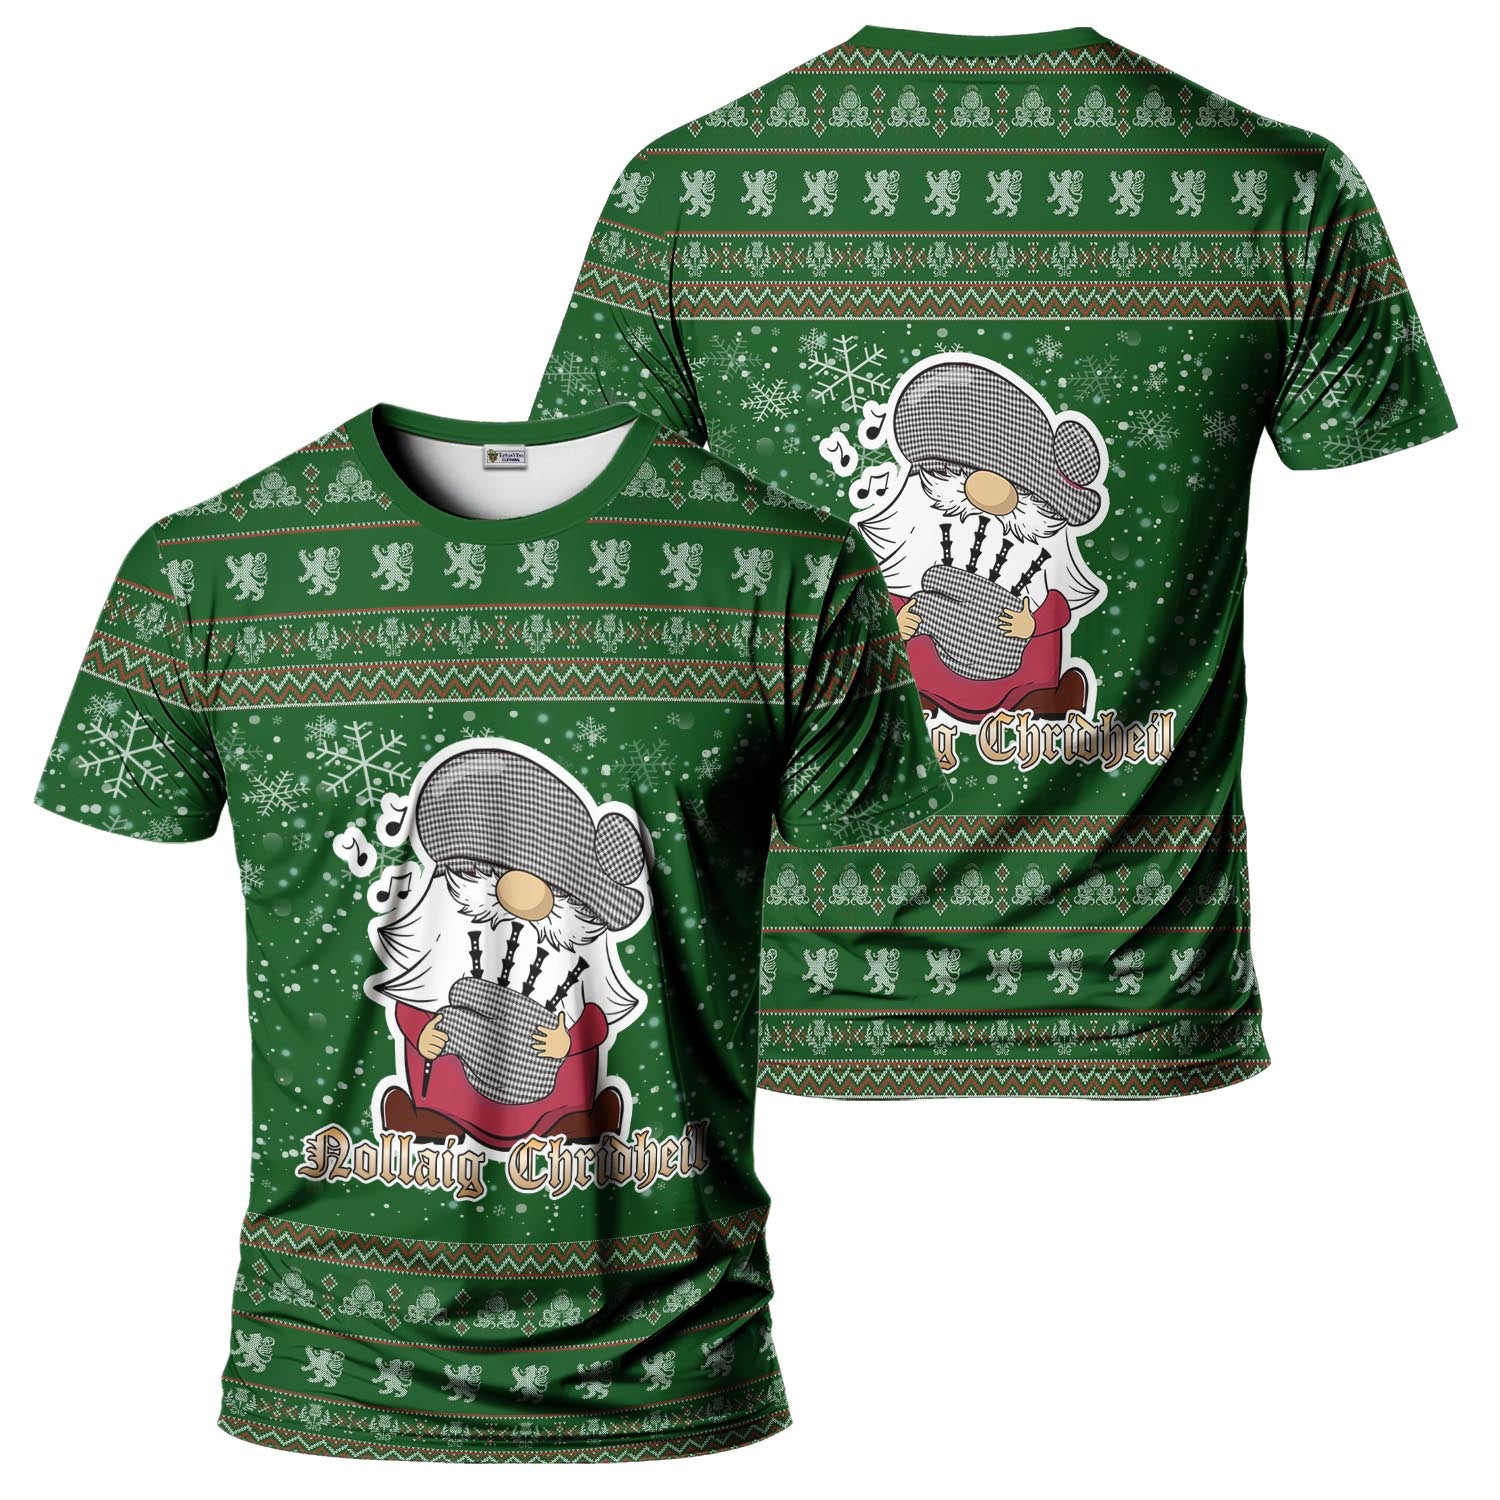 Shepherd Clan Christmas Family T-Shirt with Funny Gnome Playing Bagpipes Men's Shirt Green - Tartanvibesclothing